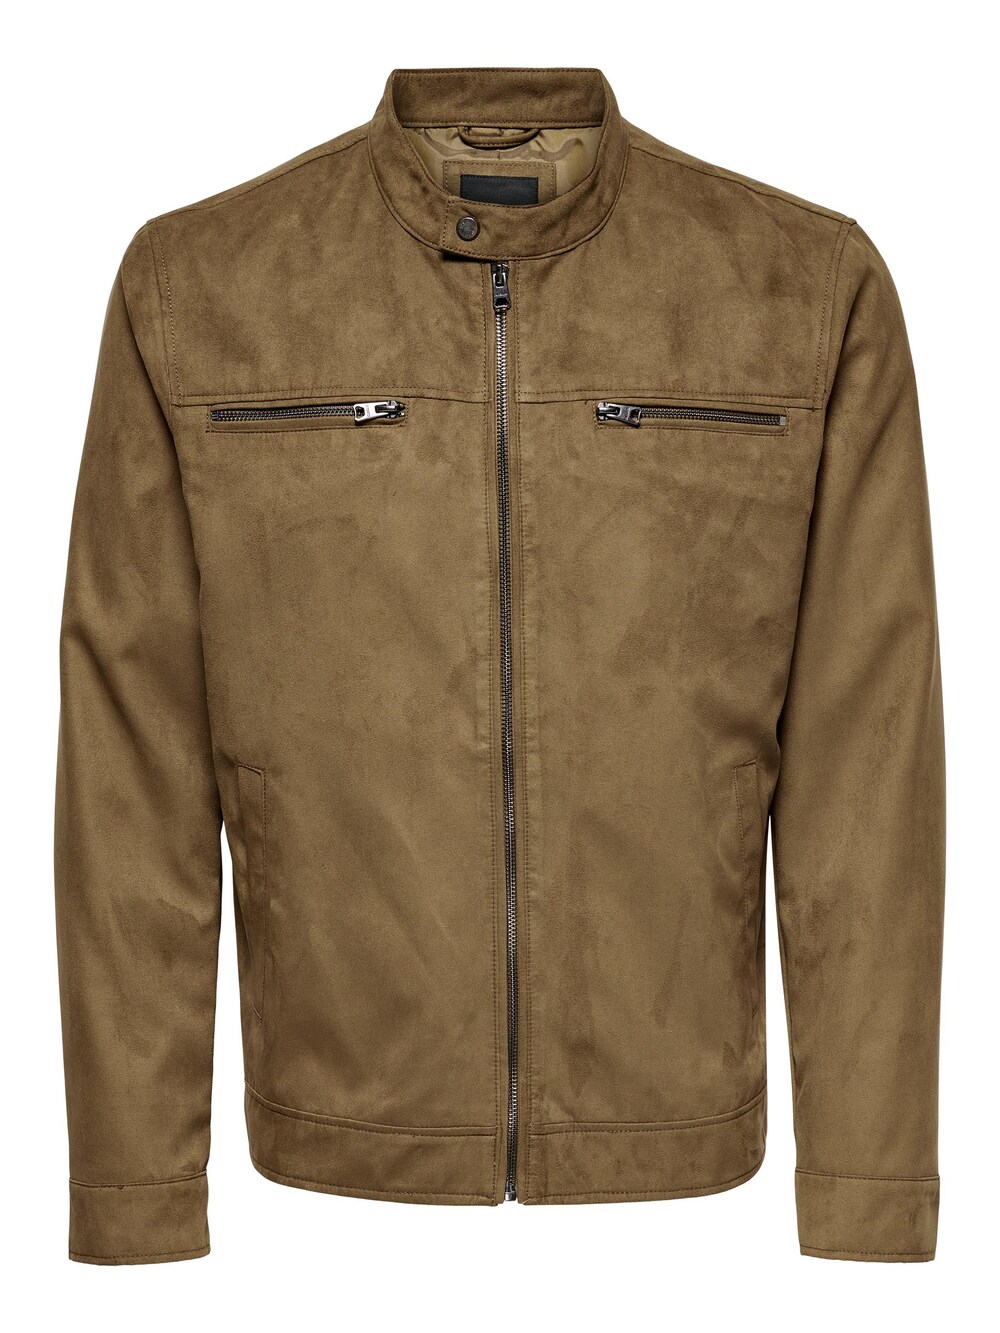 Межсезонная куртка Only & Sons Willow, коричневый футболка only y коричневый